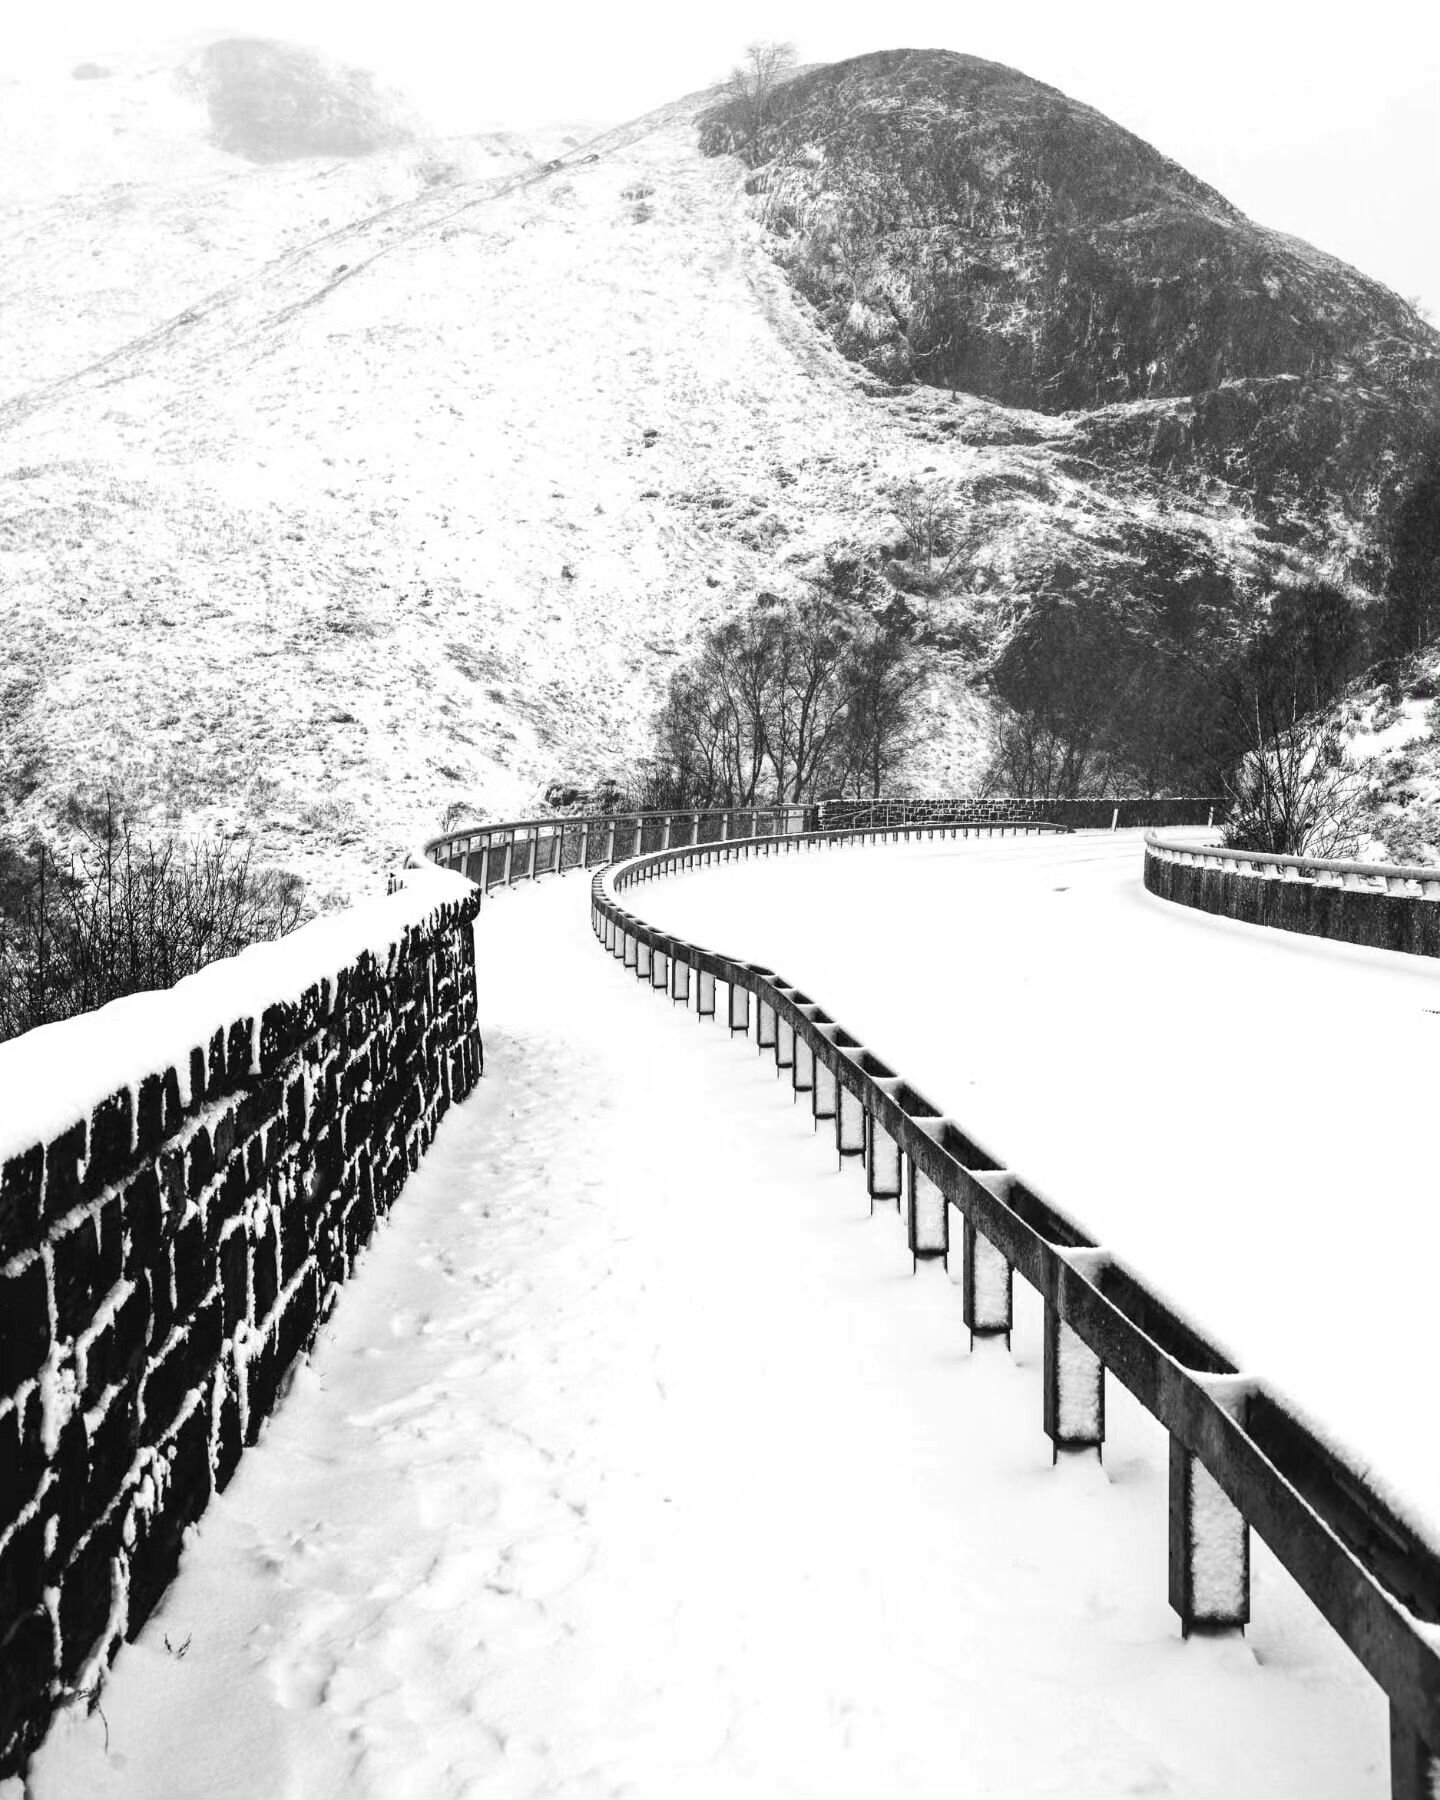 Snow track adventures, Glencoe.

#glencoe #explorescotland #scottishlandscapephotographer #landscapephotography #visitscotland #snow #winter #fineartphotography #artphotography #scottishroadtrip